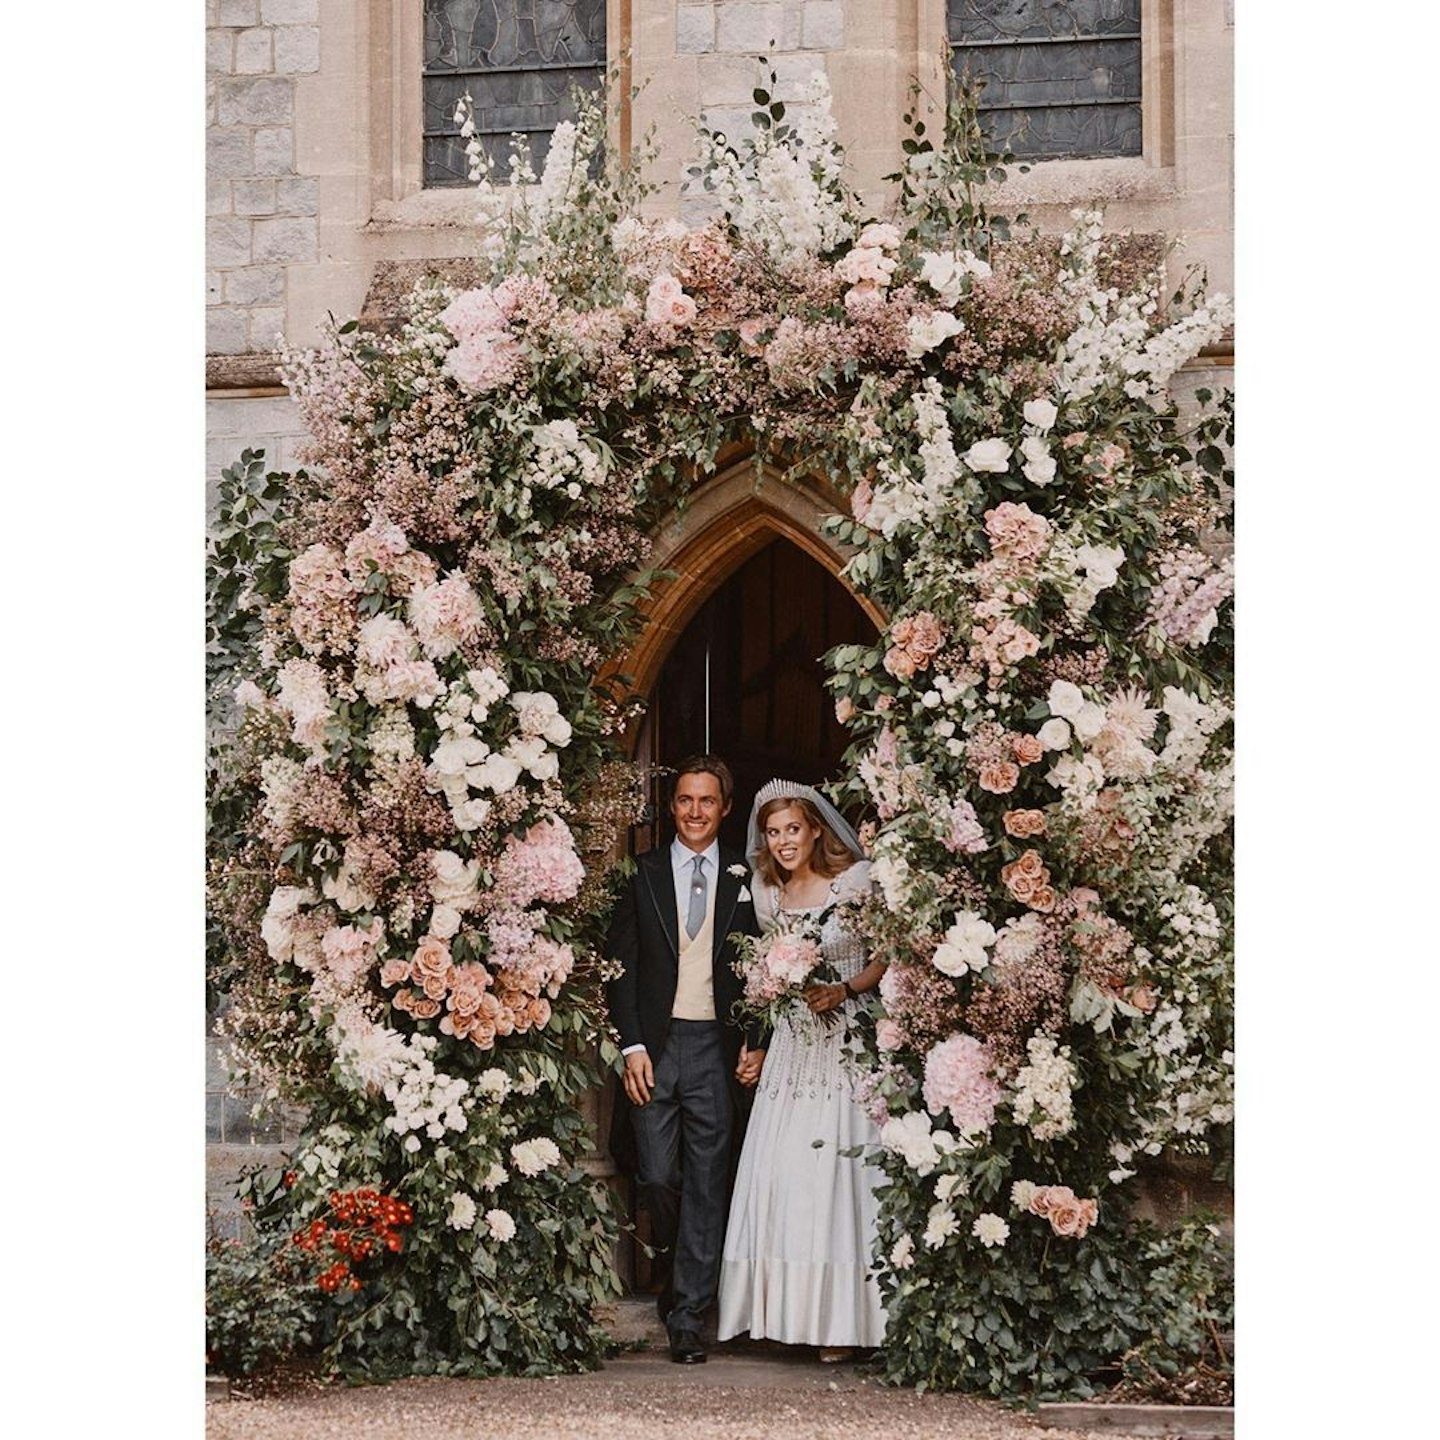 Photos from Princess Beatrice and Edoardo Mapelli Mozzi's wedding